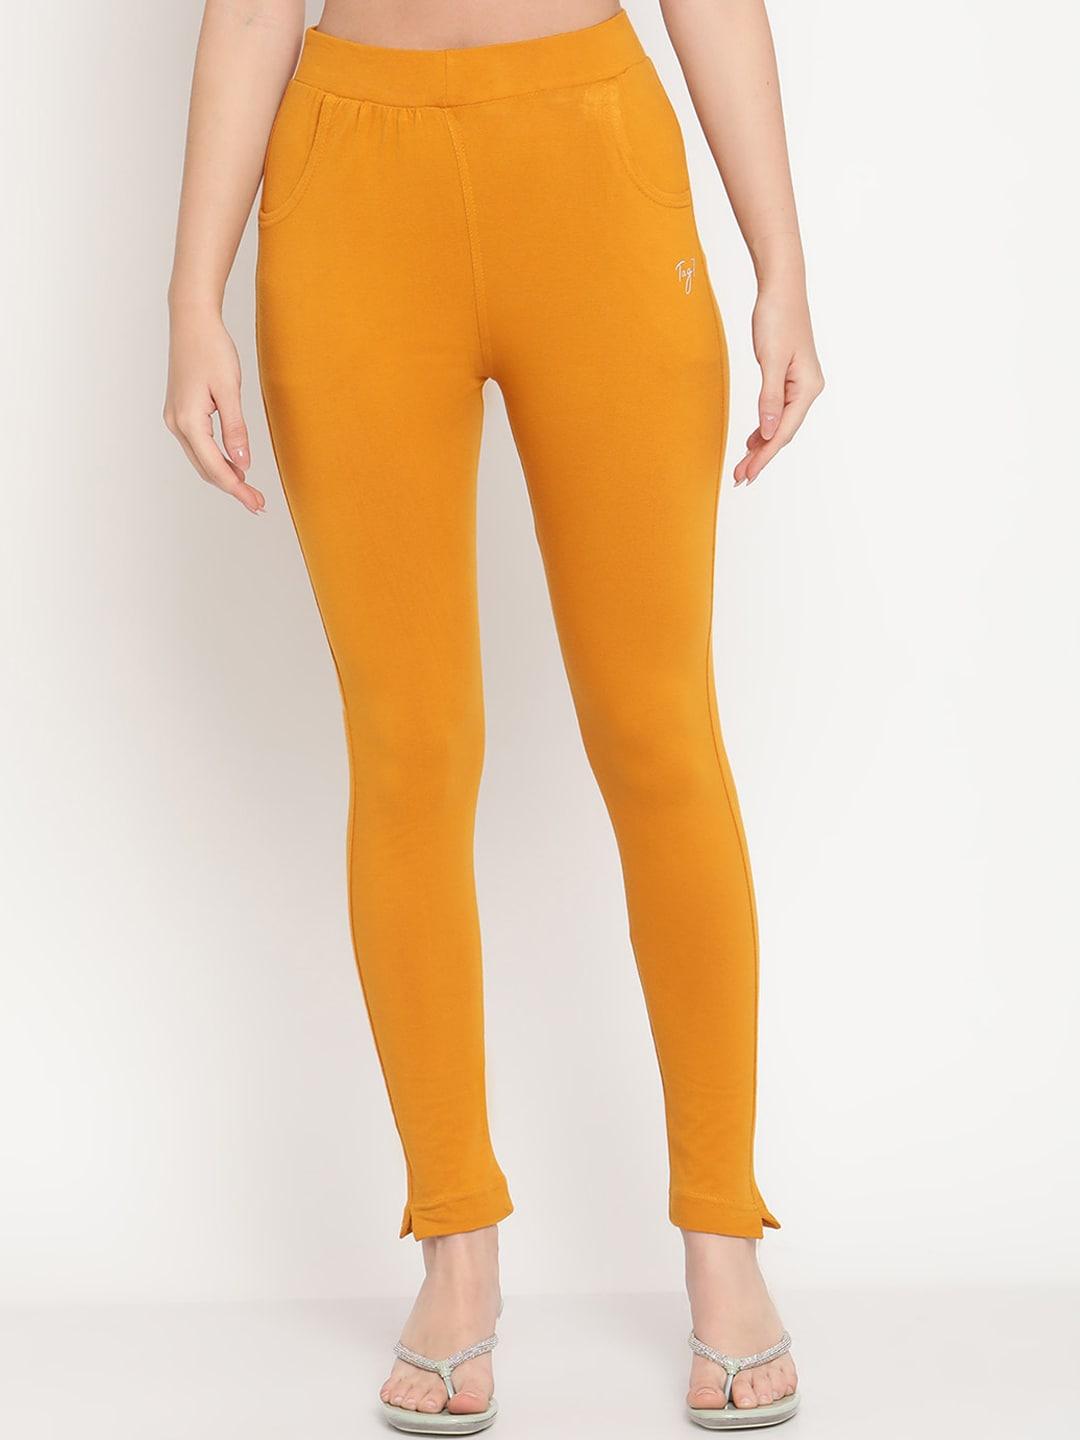 tag 7 women mustard solid leggings